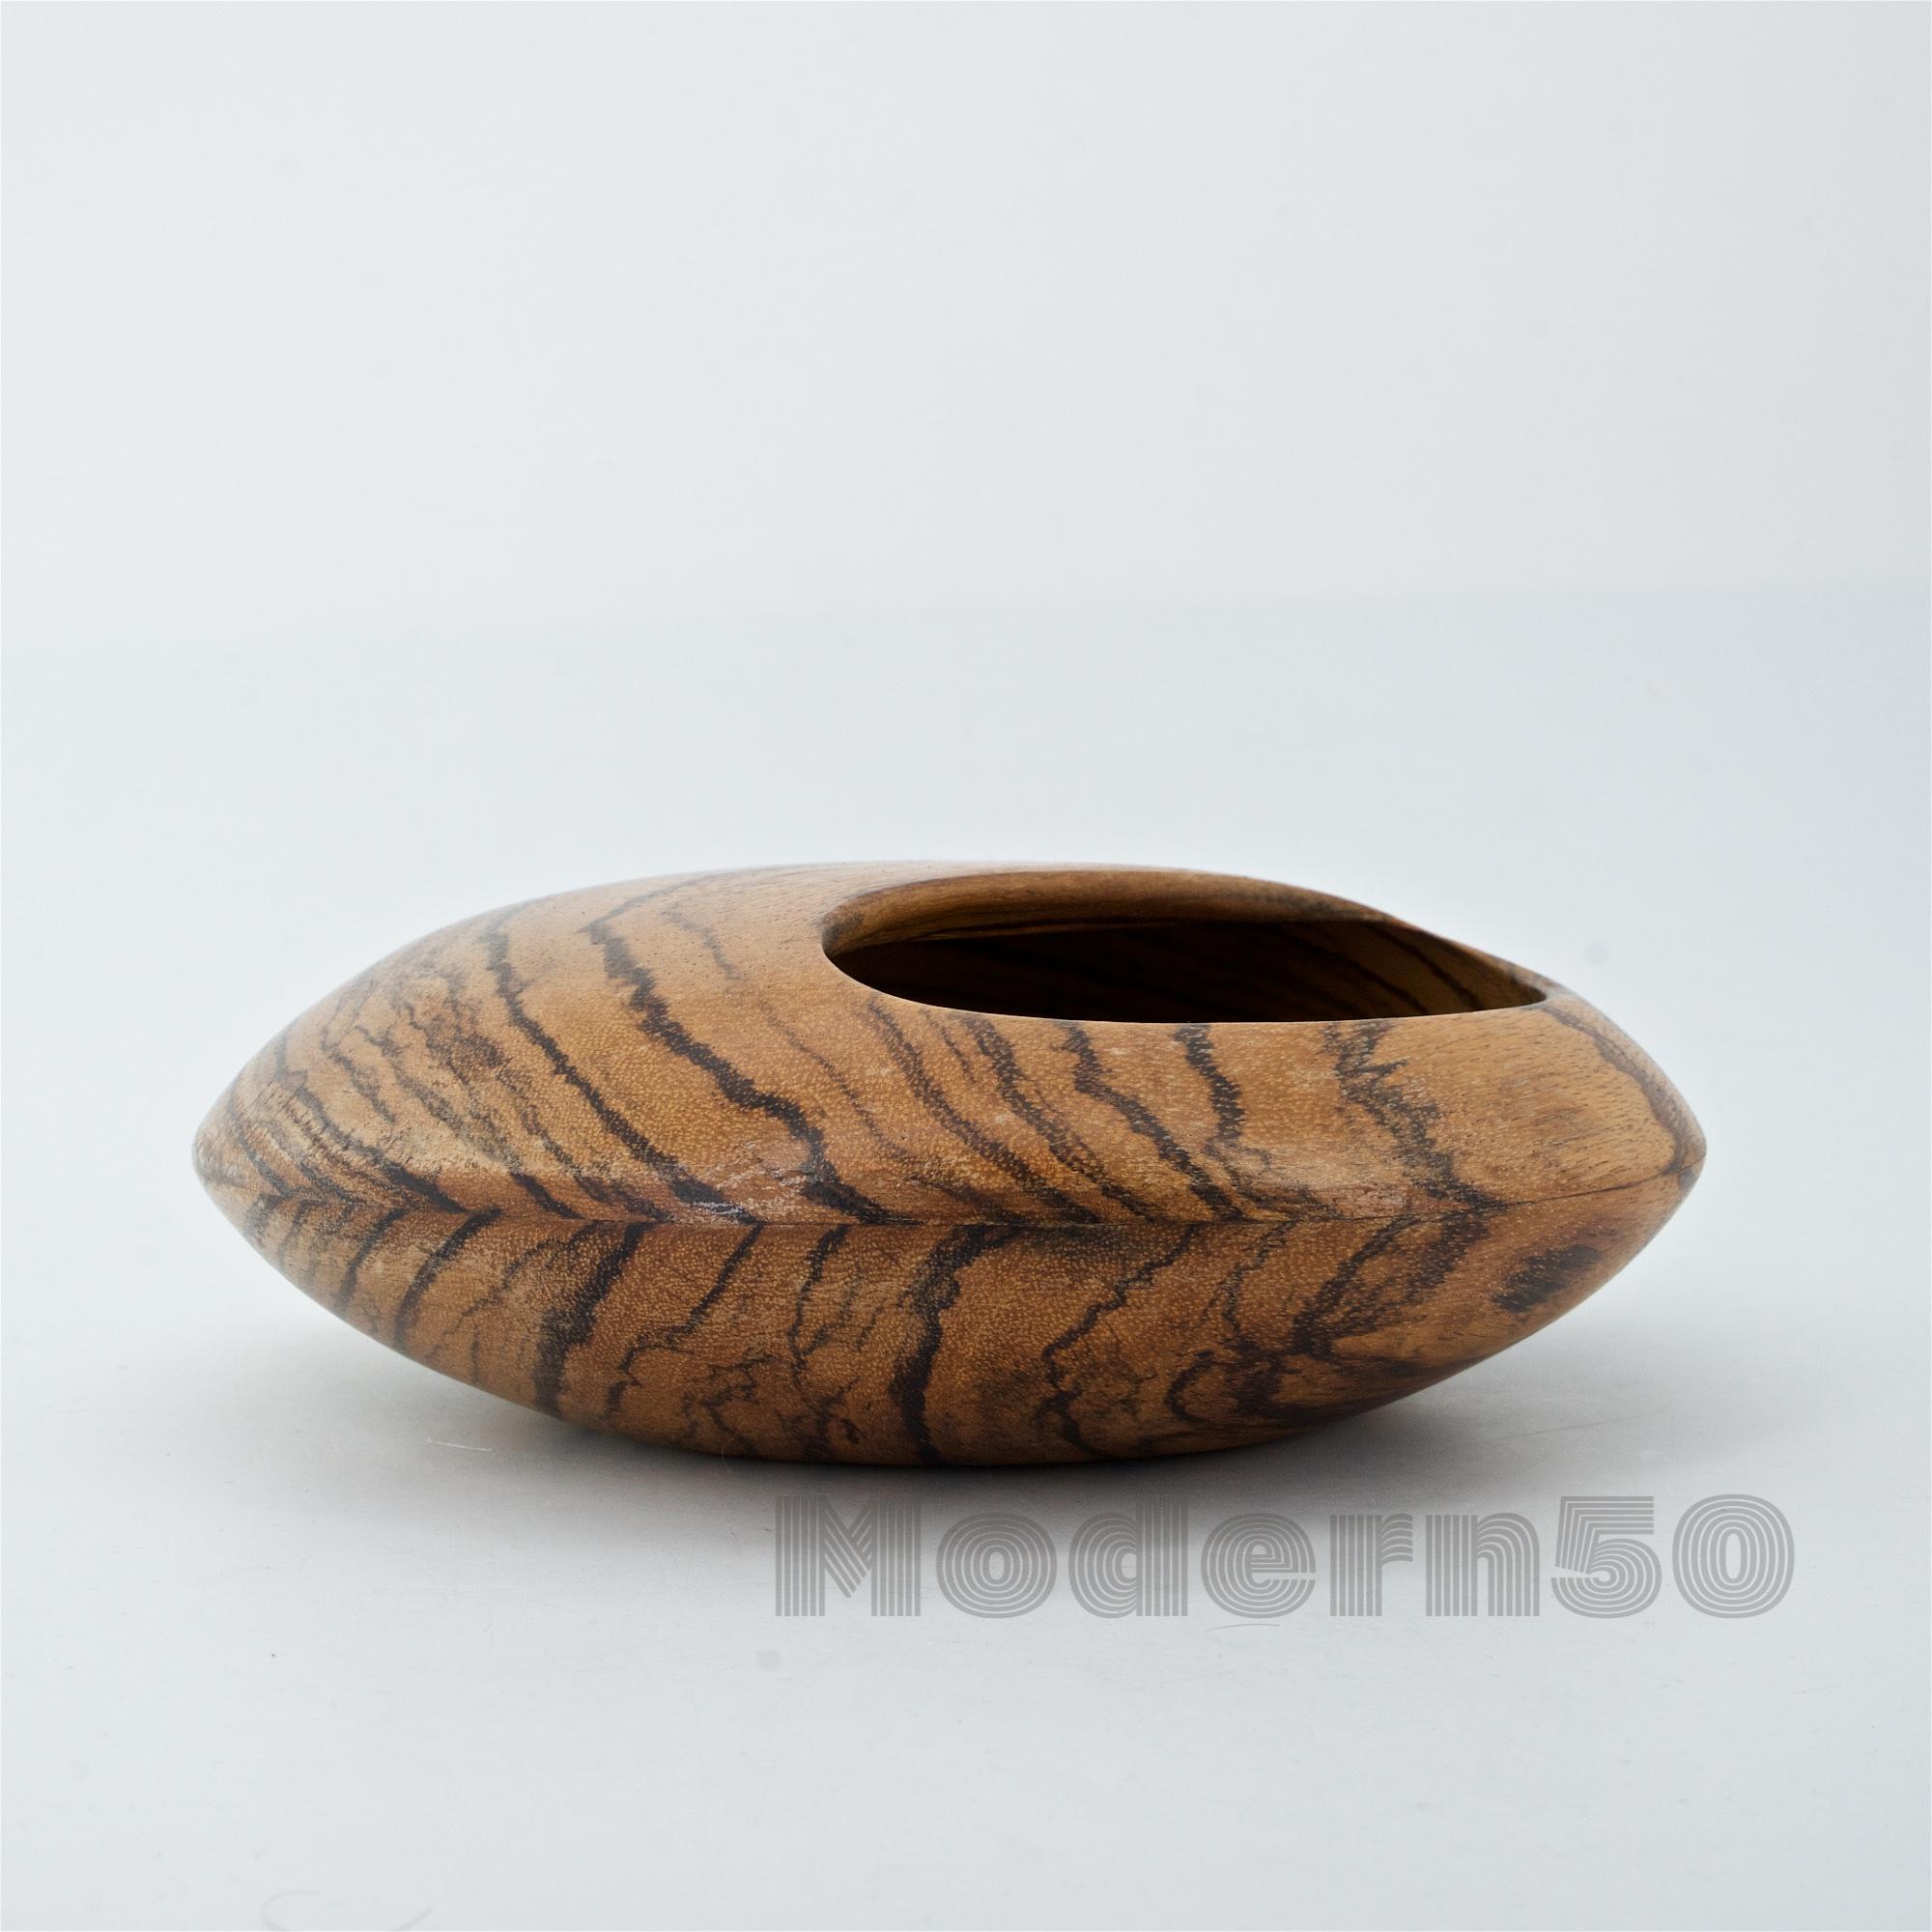 Turned Scandinavian Zebra Wood Sculpture Centerpiece Orb Dish Bowl Space Age Mattsson For Sale